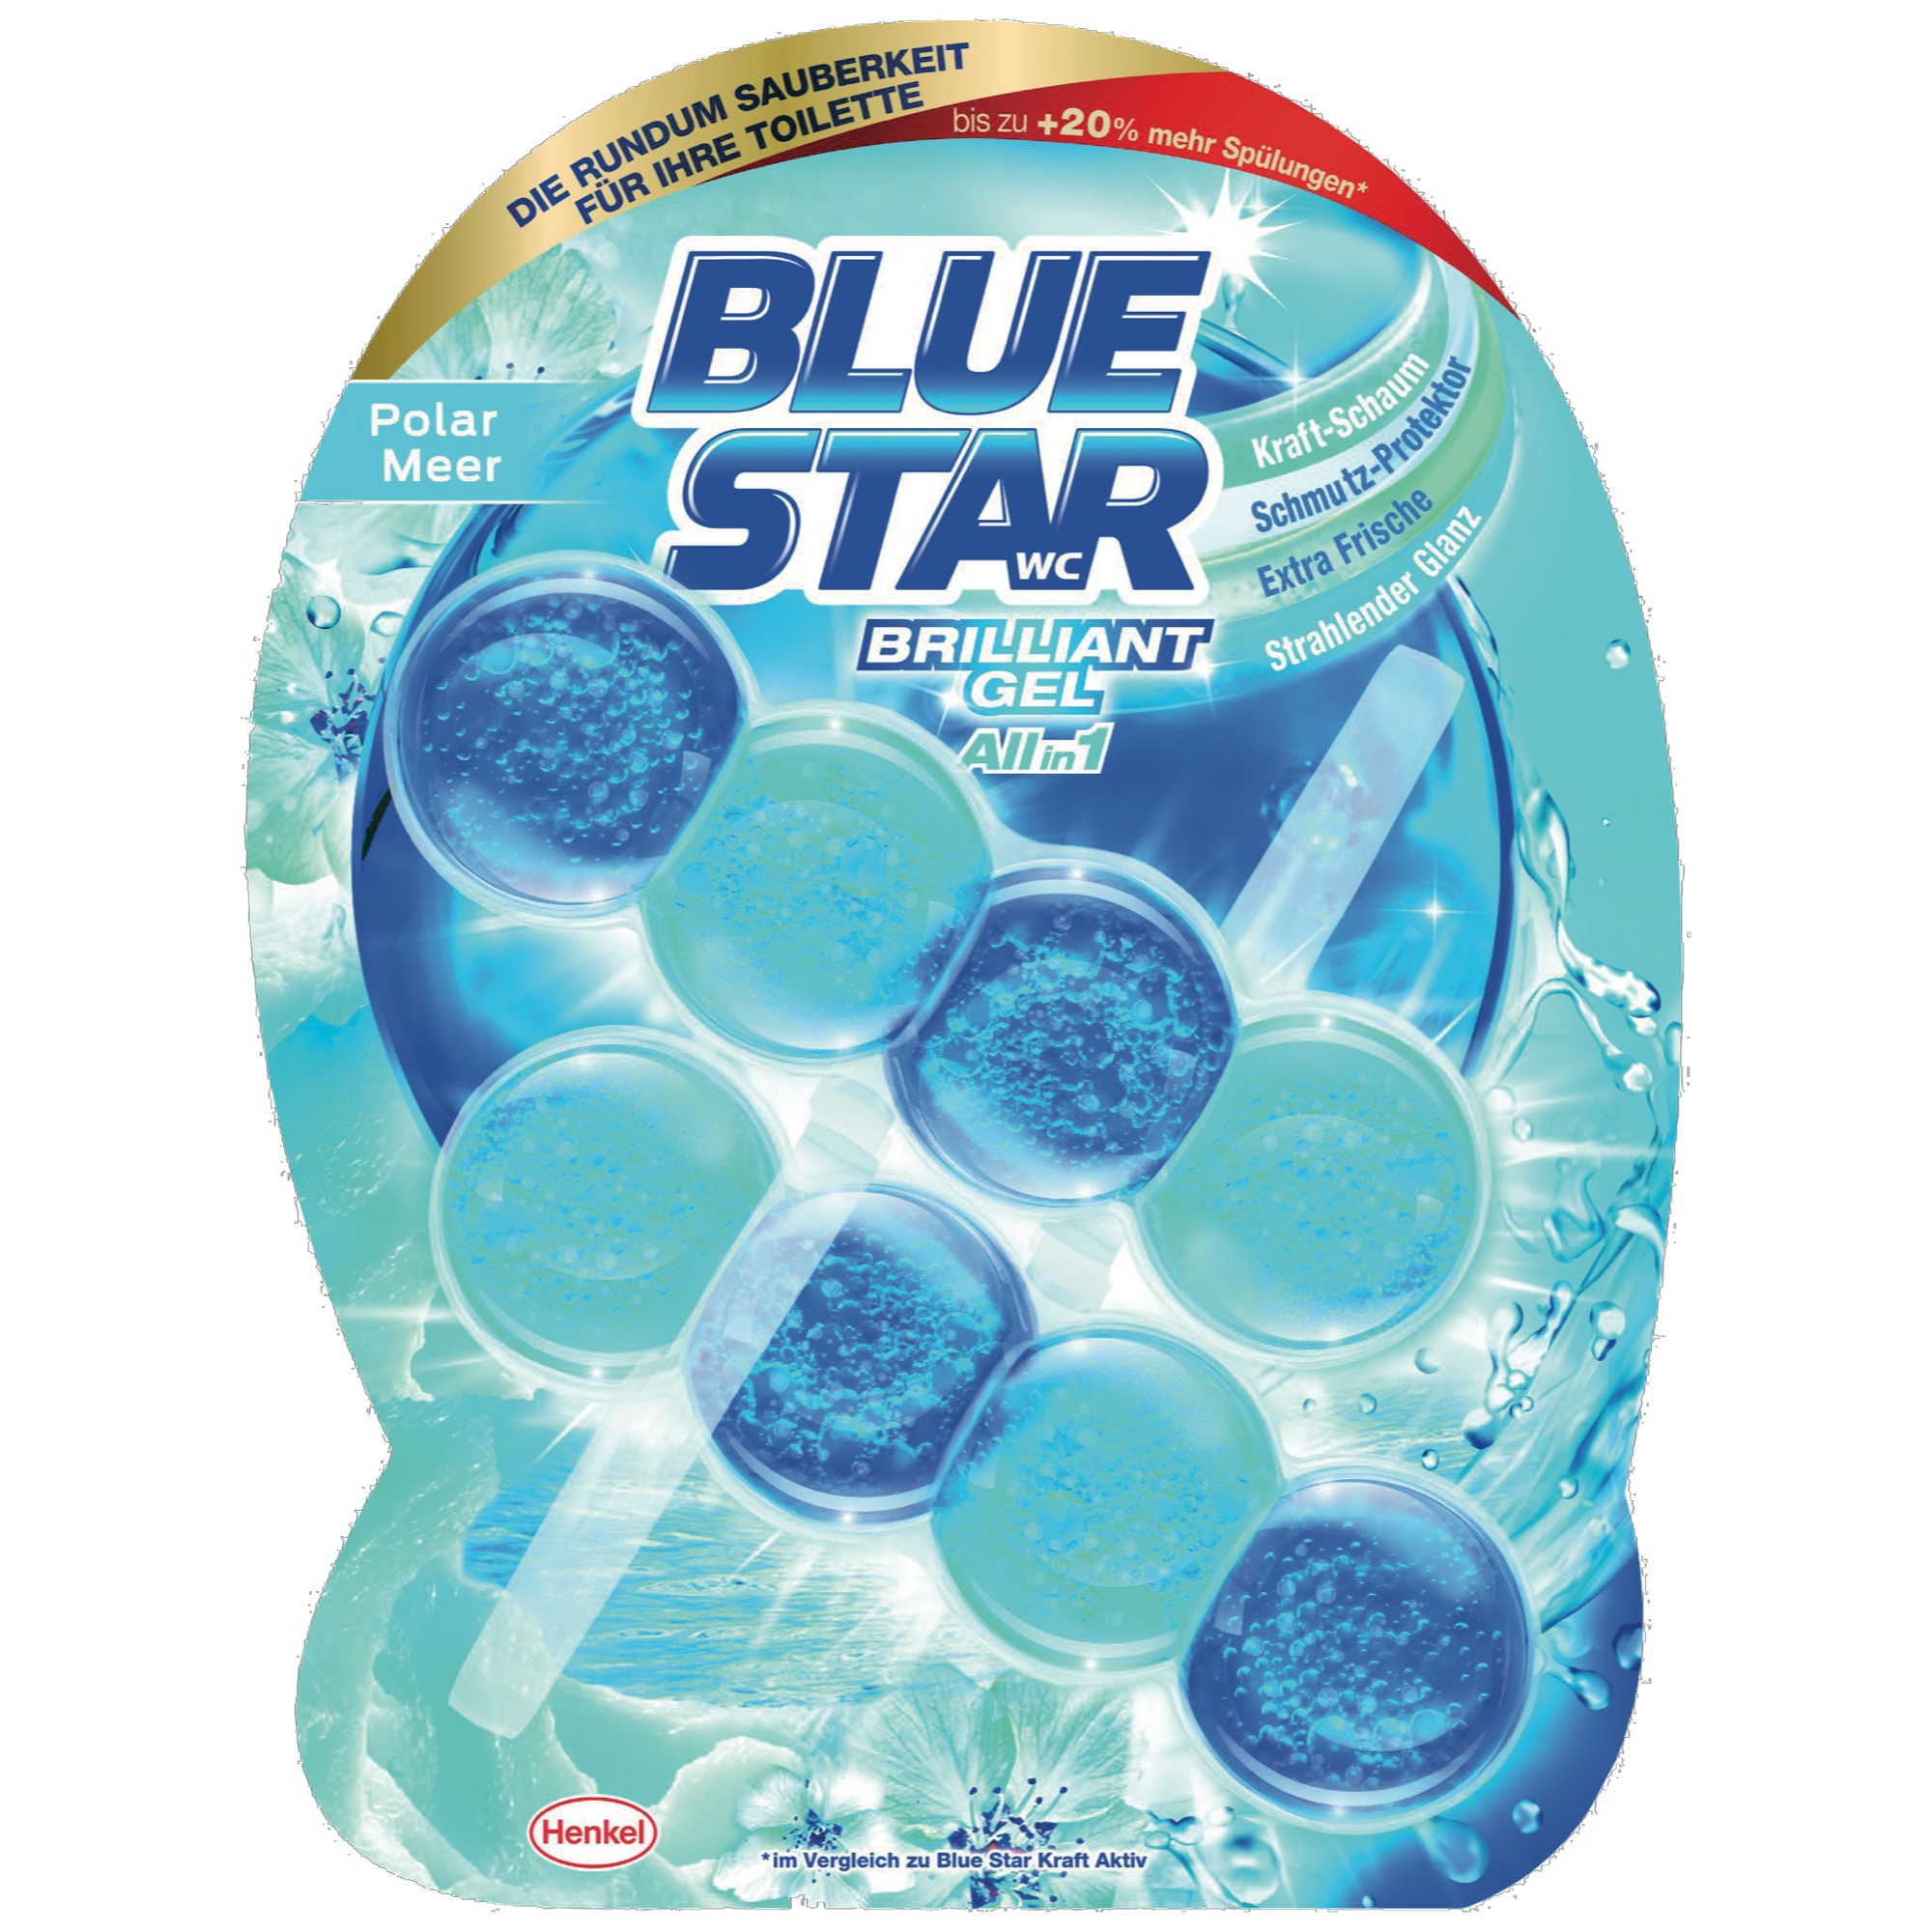 Blue Star Brilliant Gel 2x42 Polarmeer